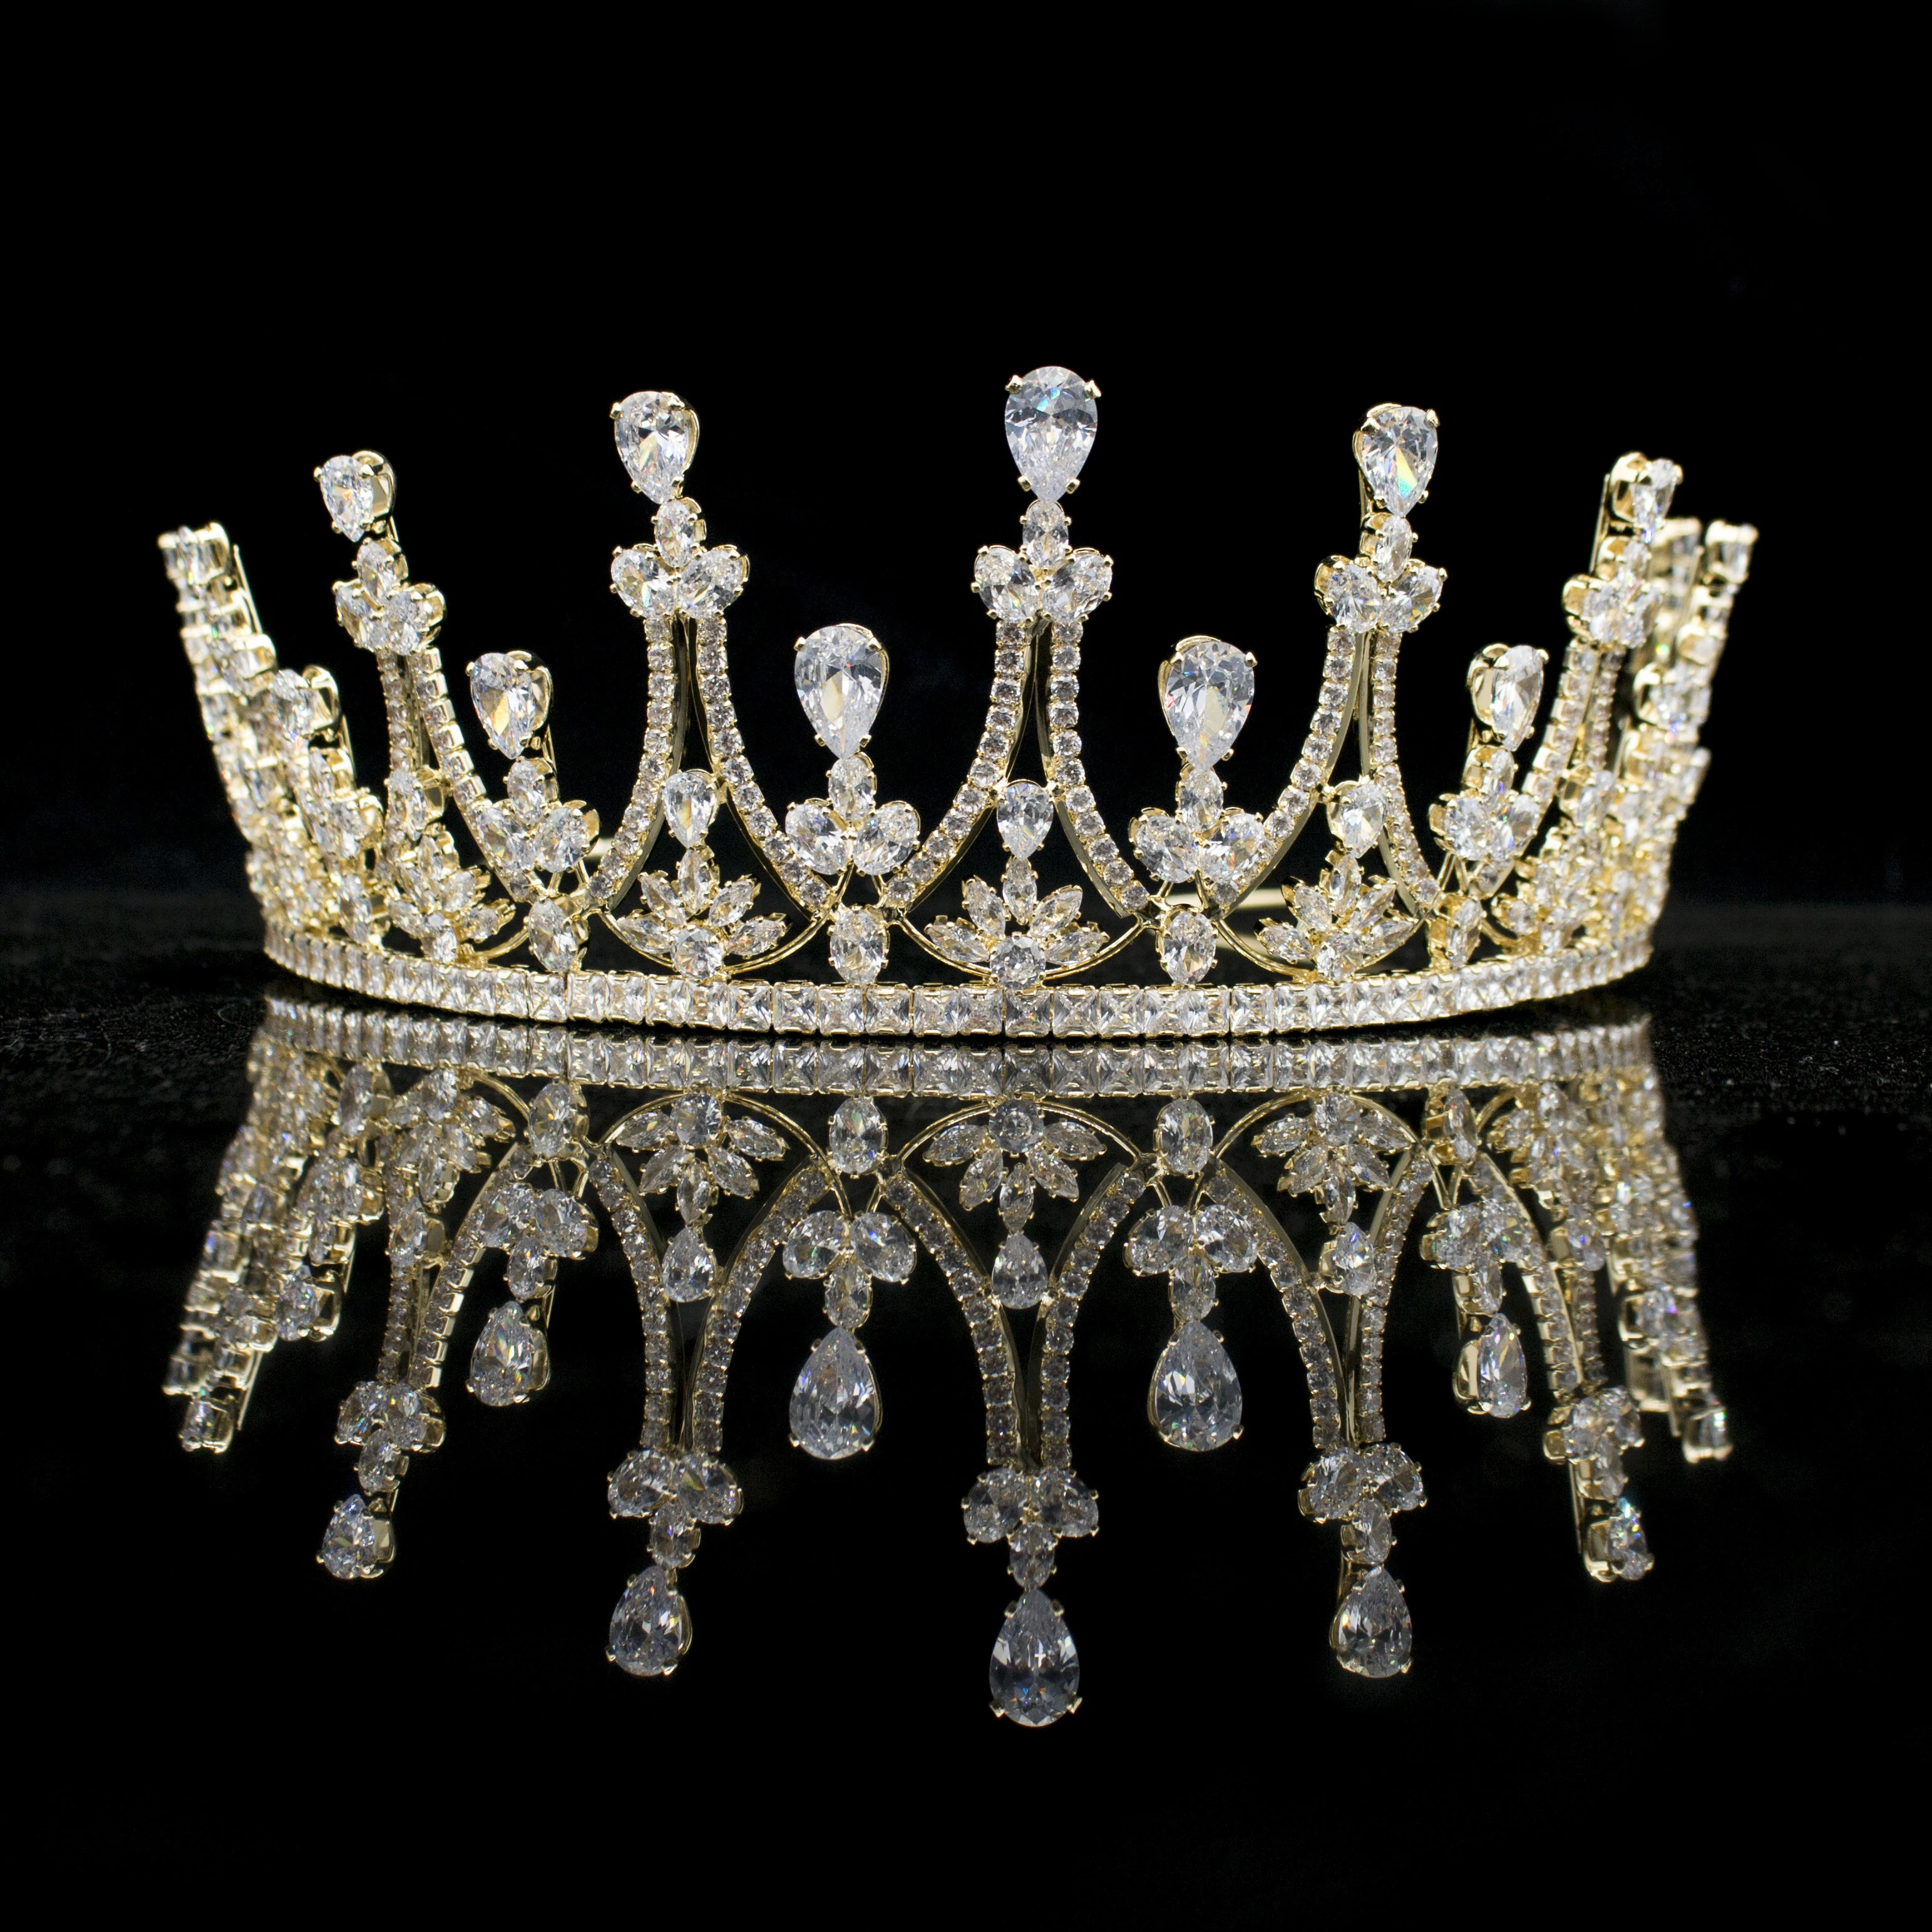 Hot sale Shinning Crystal Headpiece Women headpiece Hair accessories Gold Silver Princess Pageant tiara